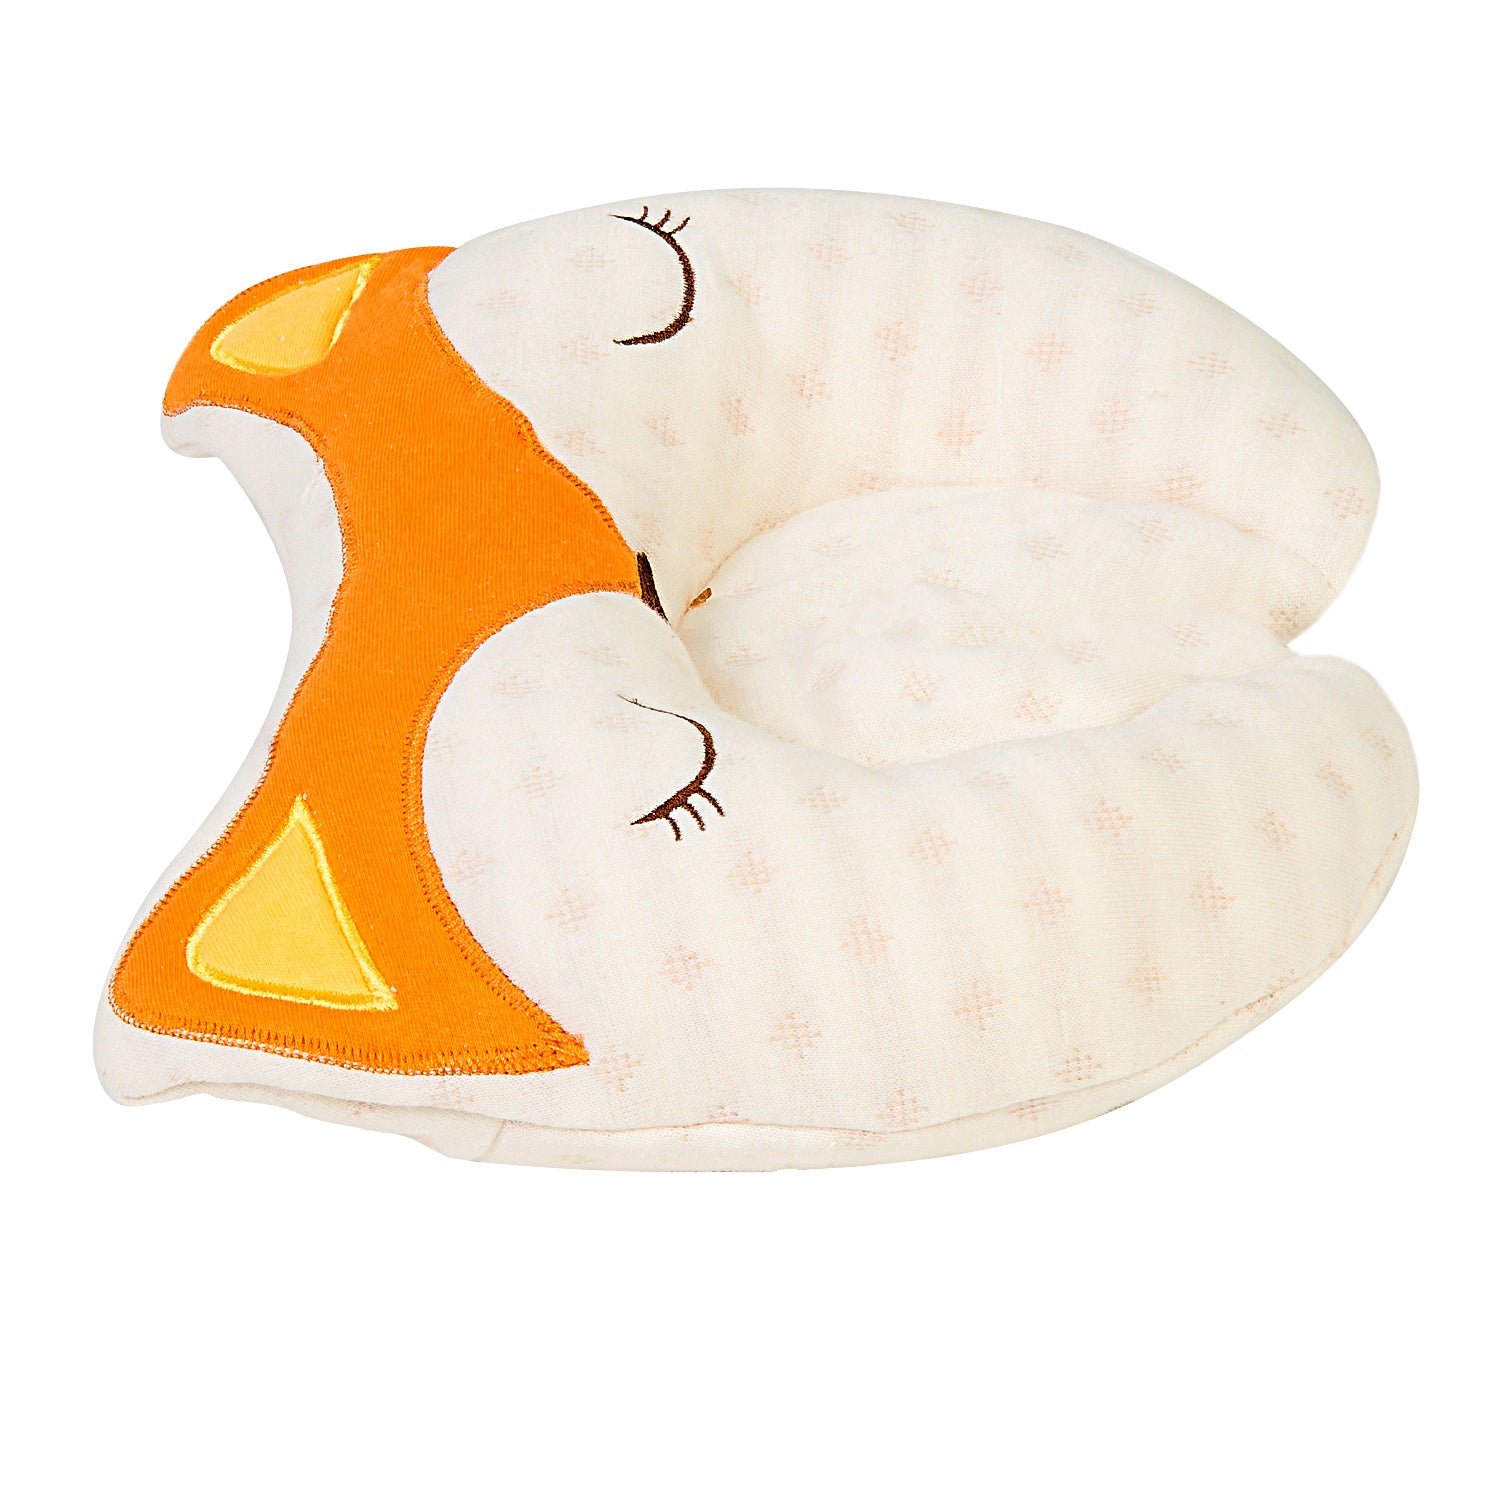 Sleepy Fox Orange Memory Pillow - Baby Moo